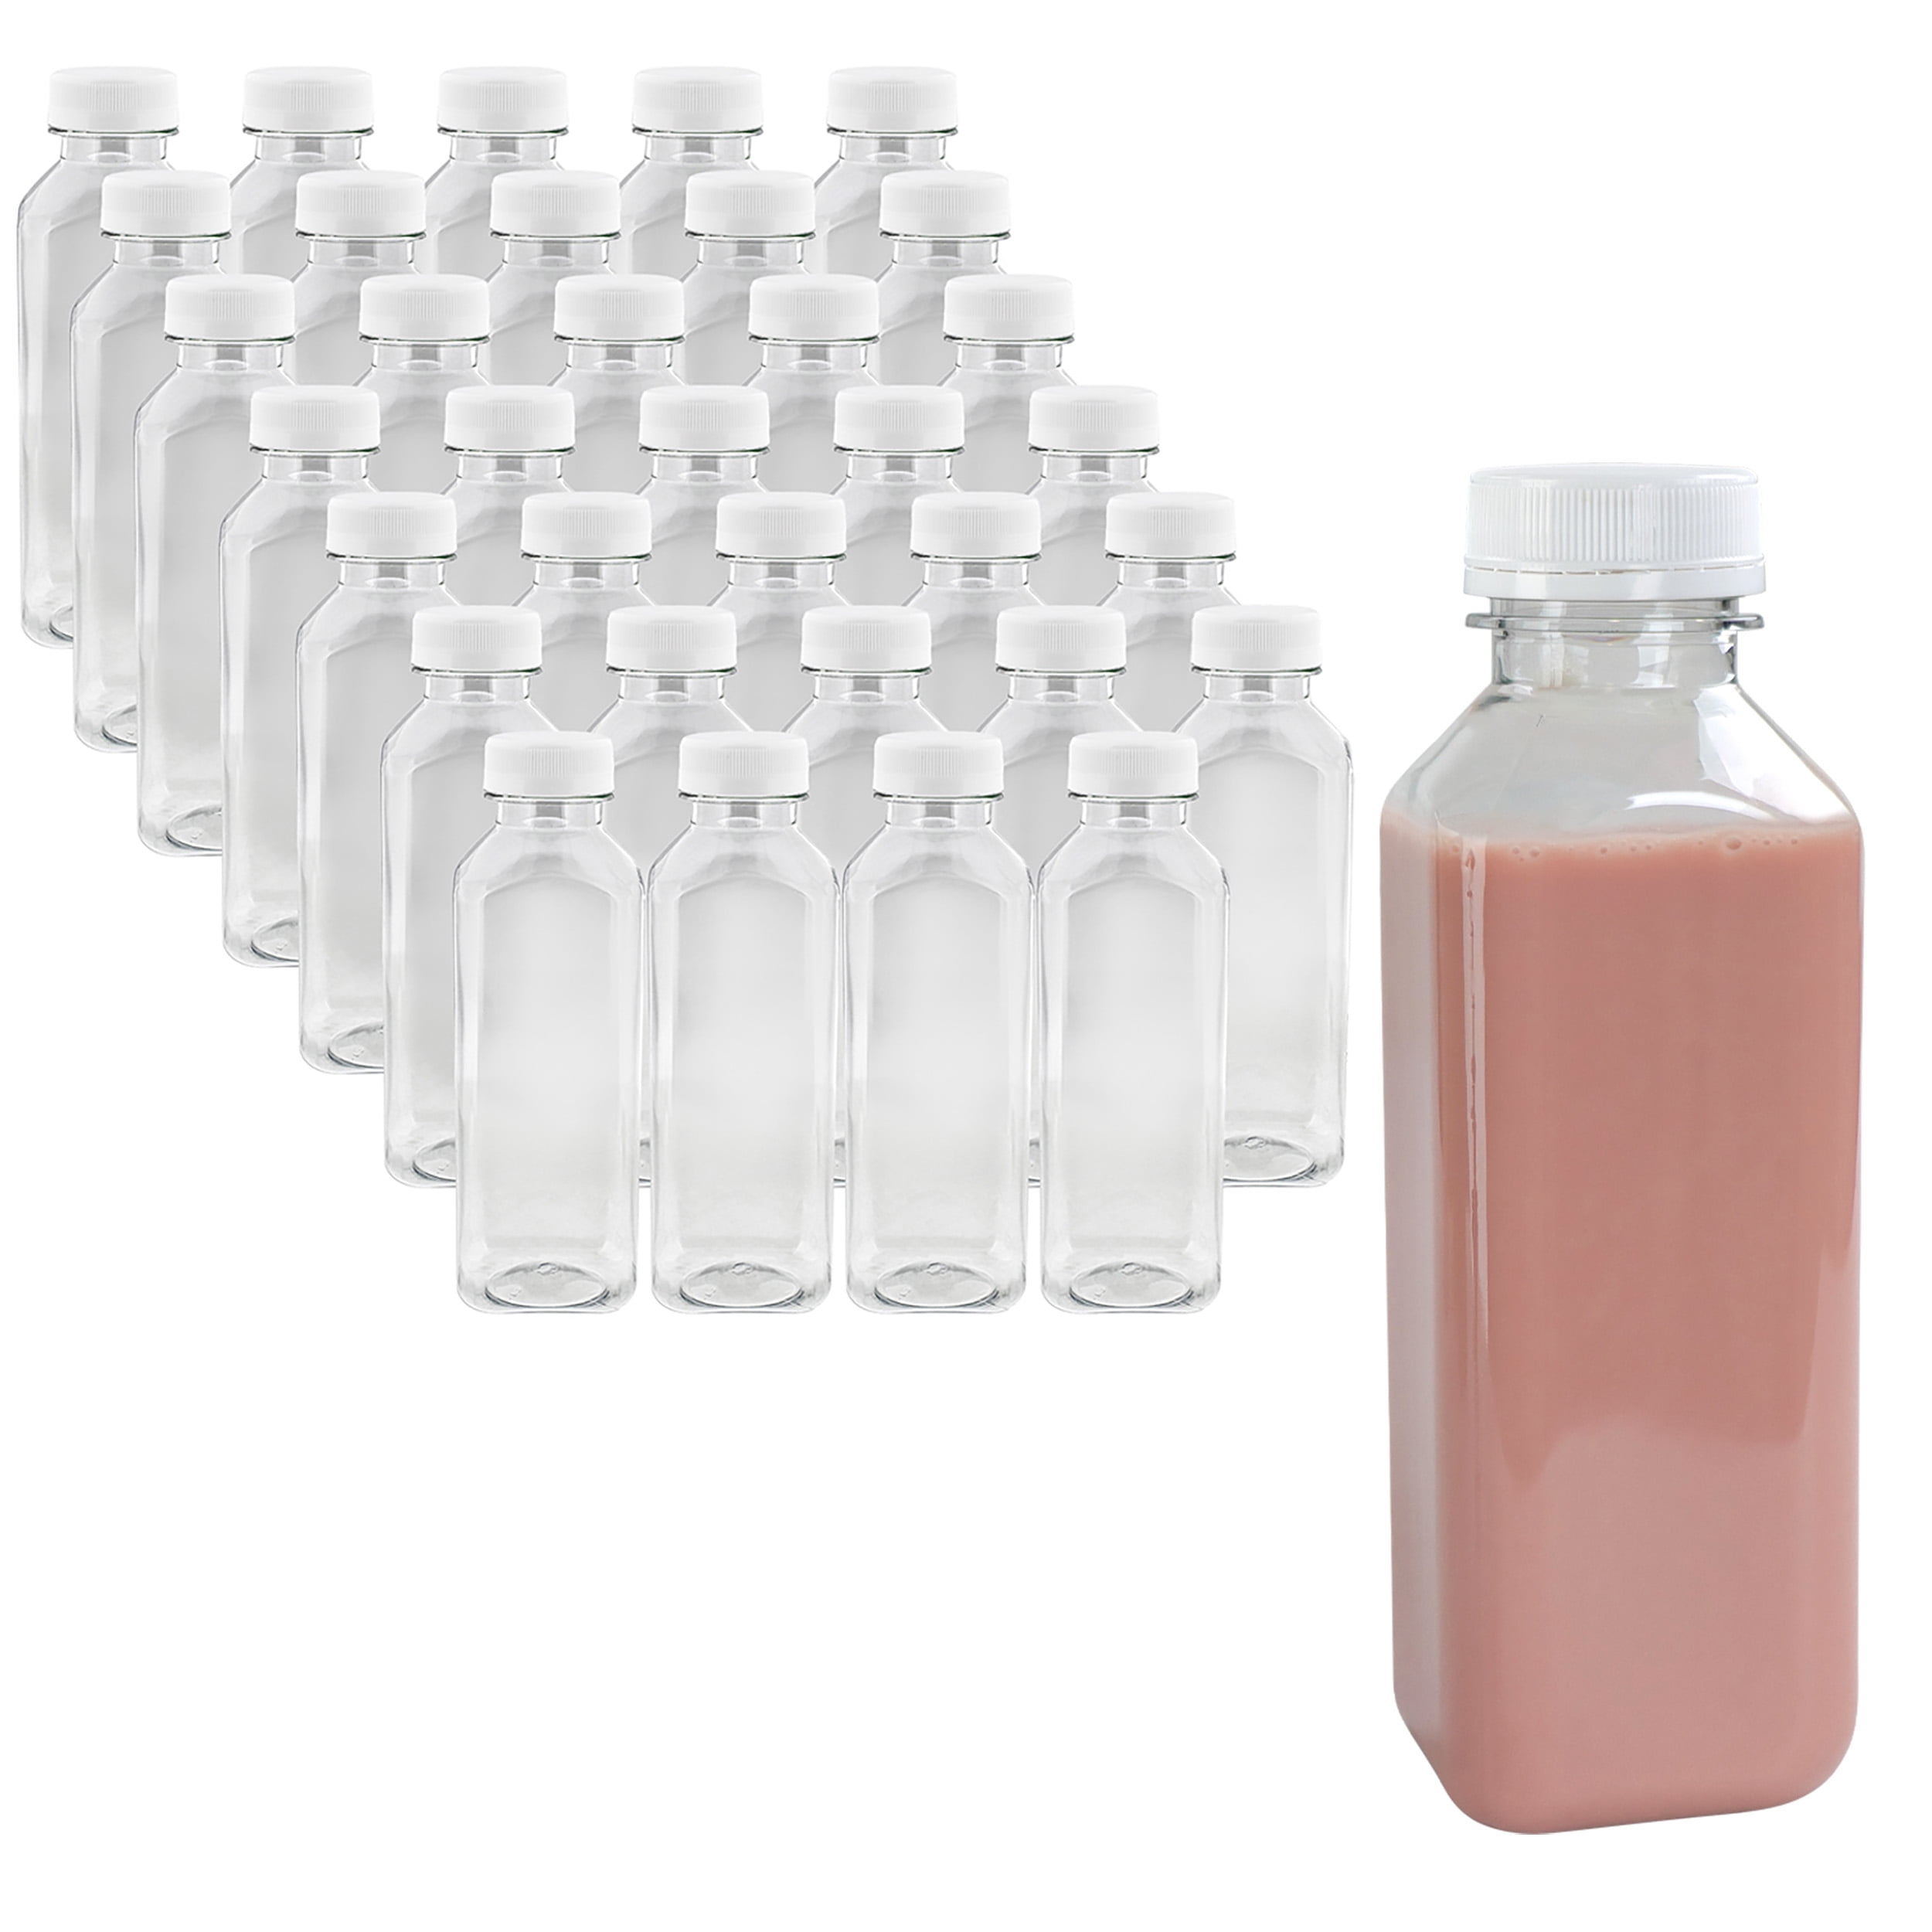 Tanlade 100 Pcs Plastic Juice Bottles with Caps Refrigerator Drink